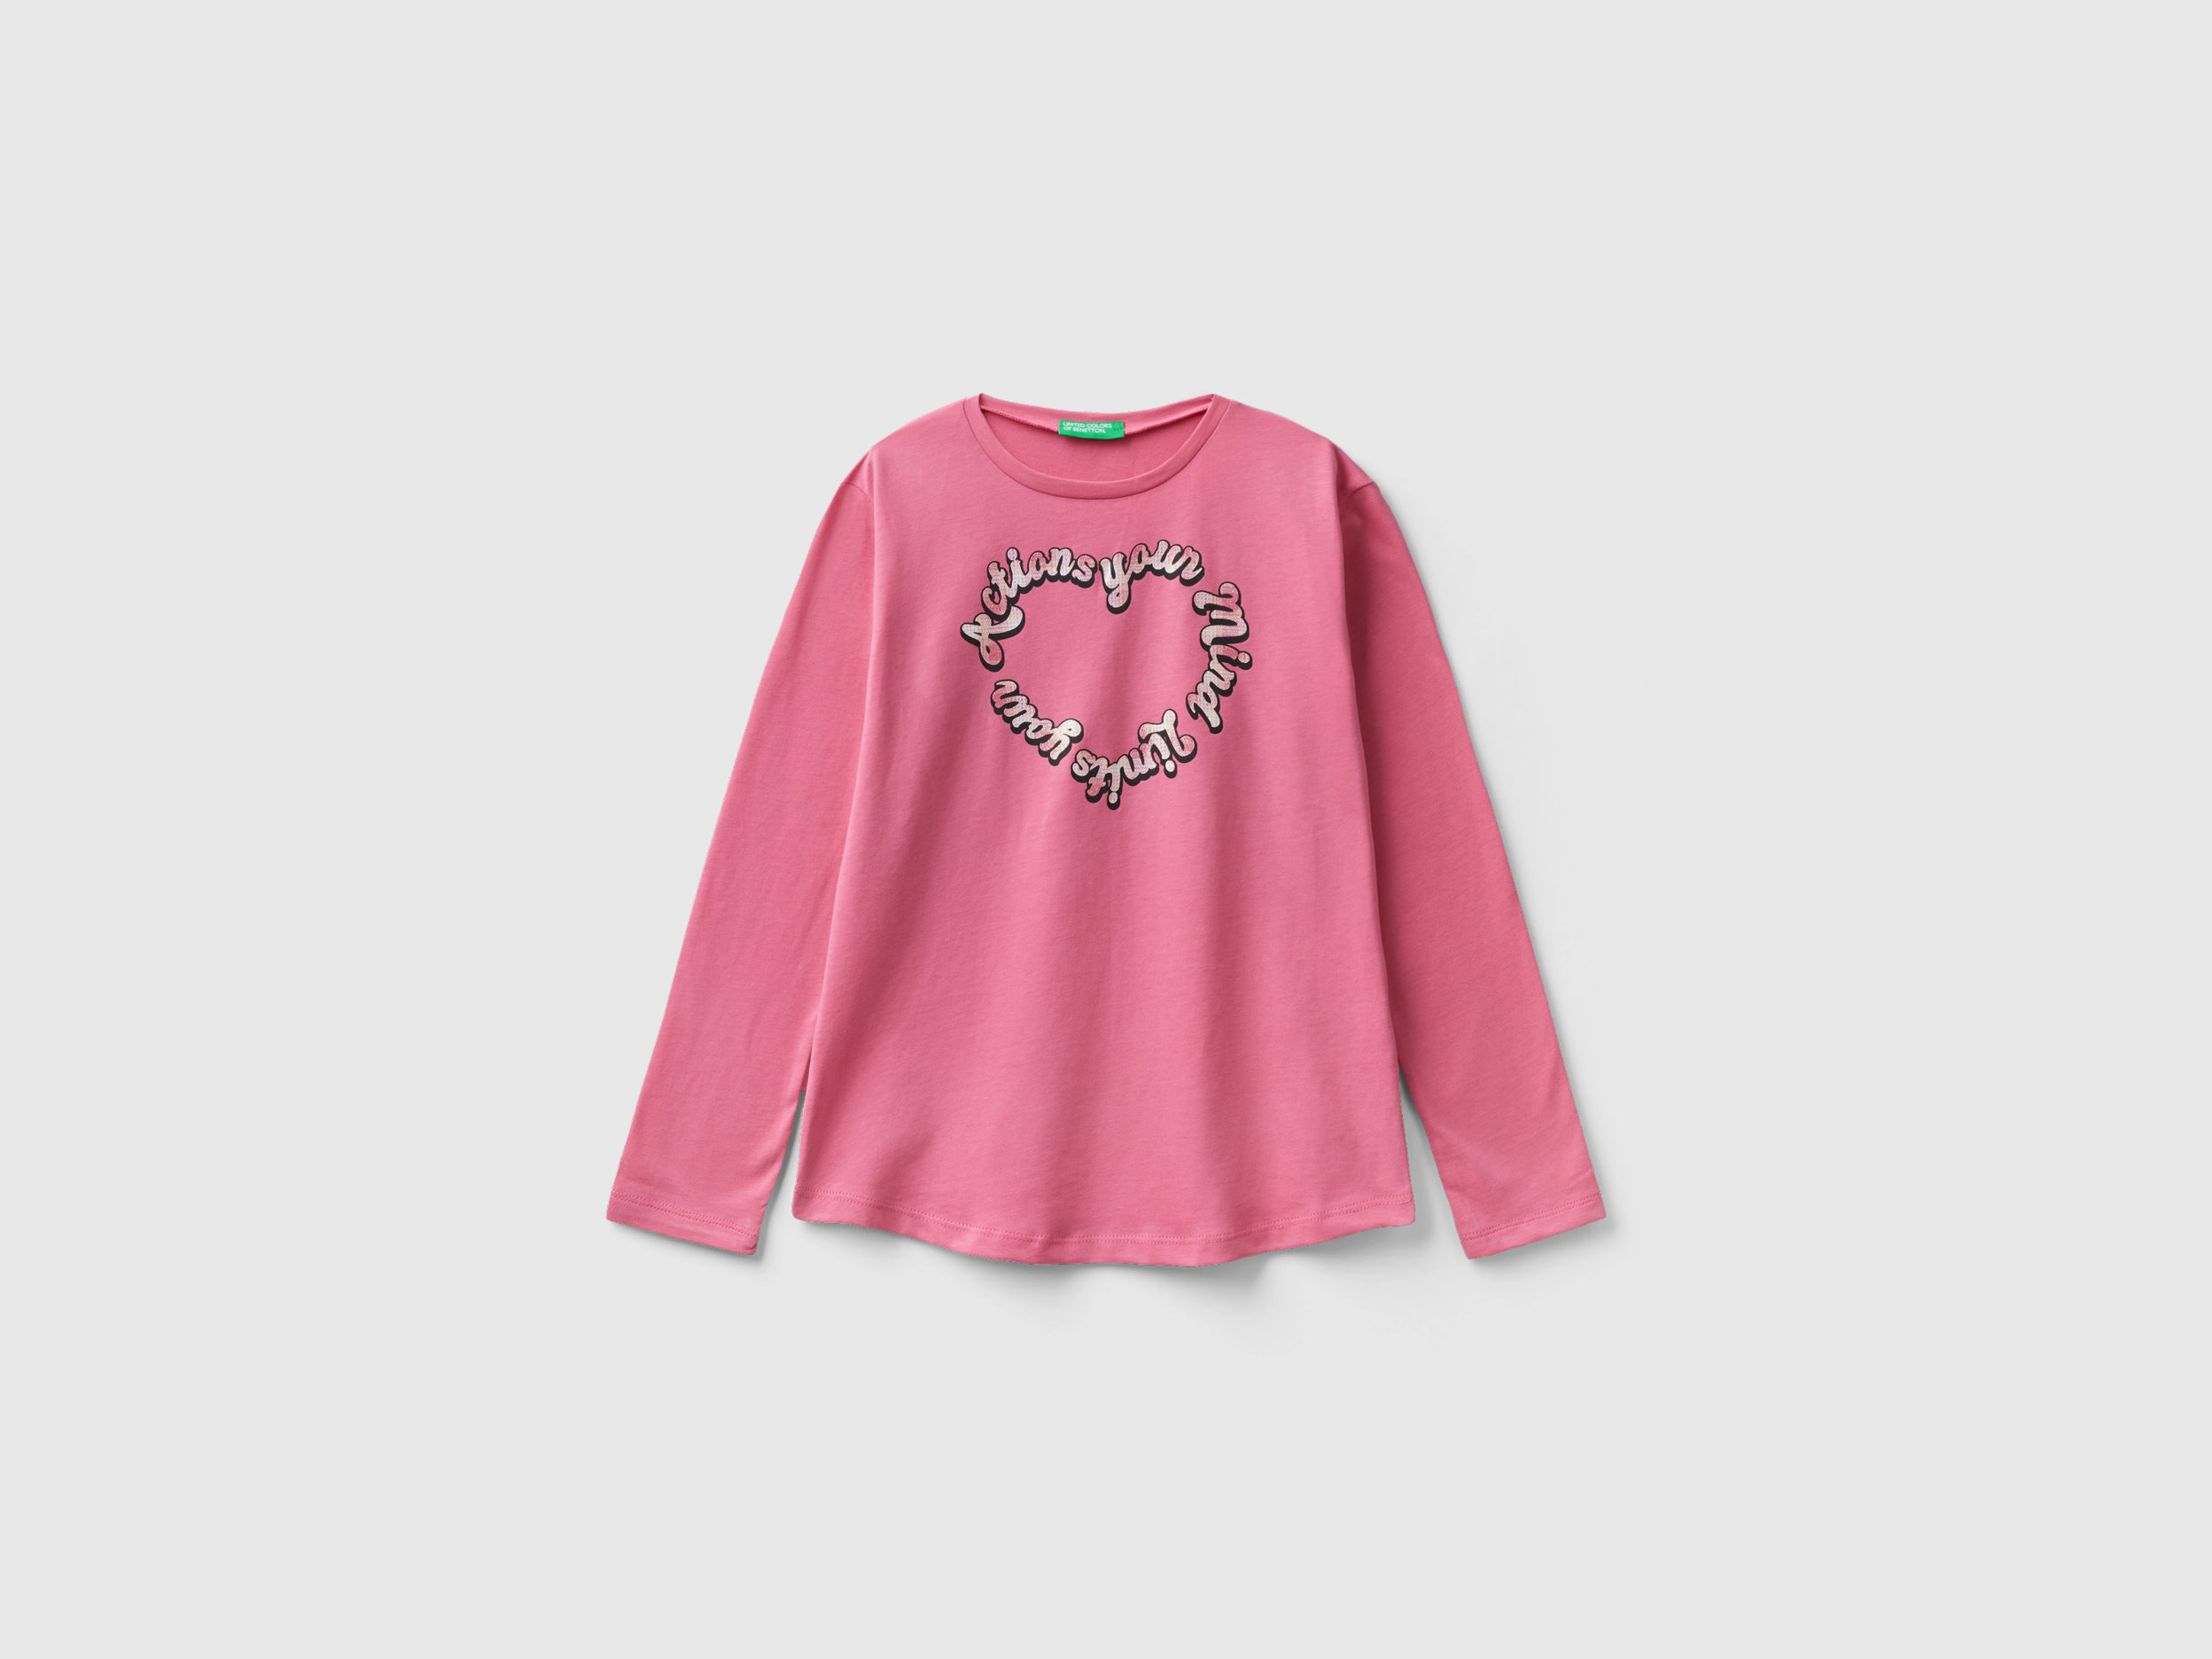 Benetton, Warm Cotton T-shirt With Glittery Print, size L, Pink, Kids